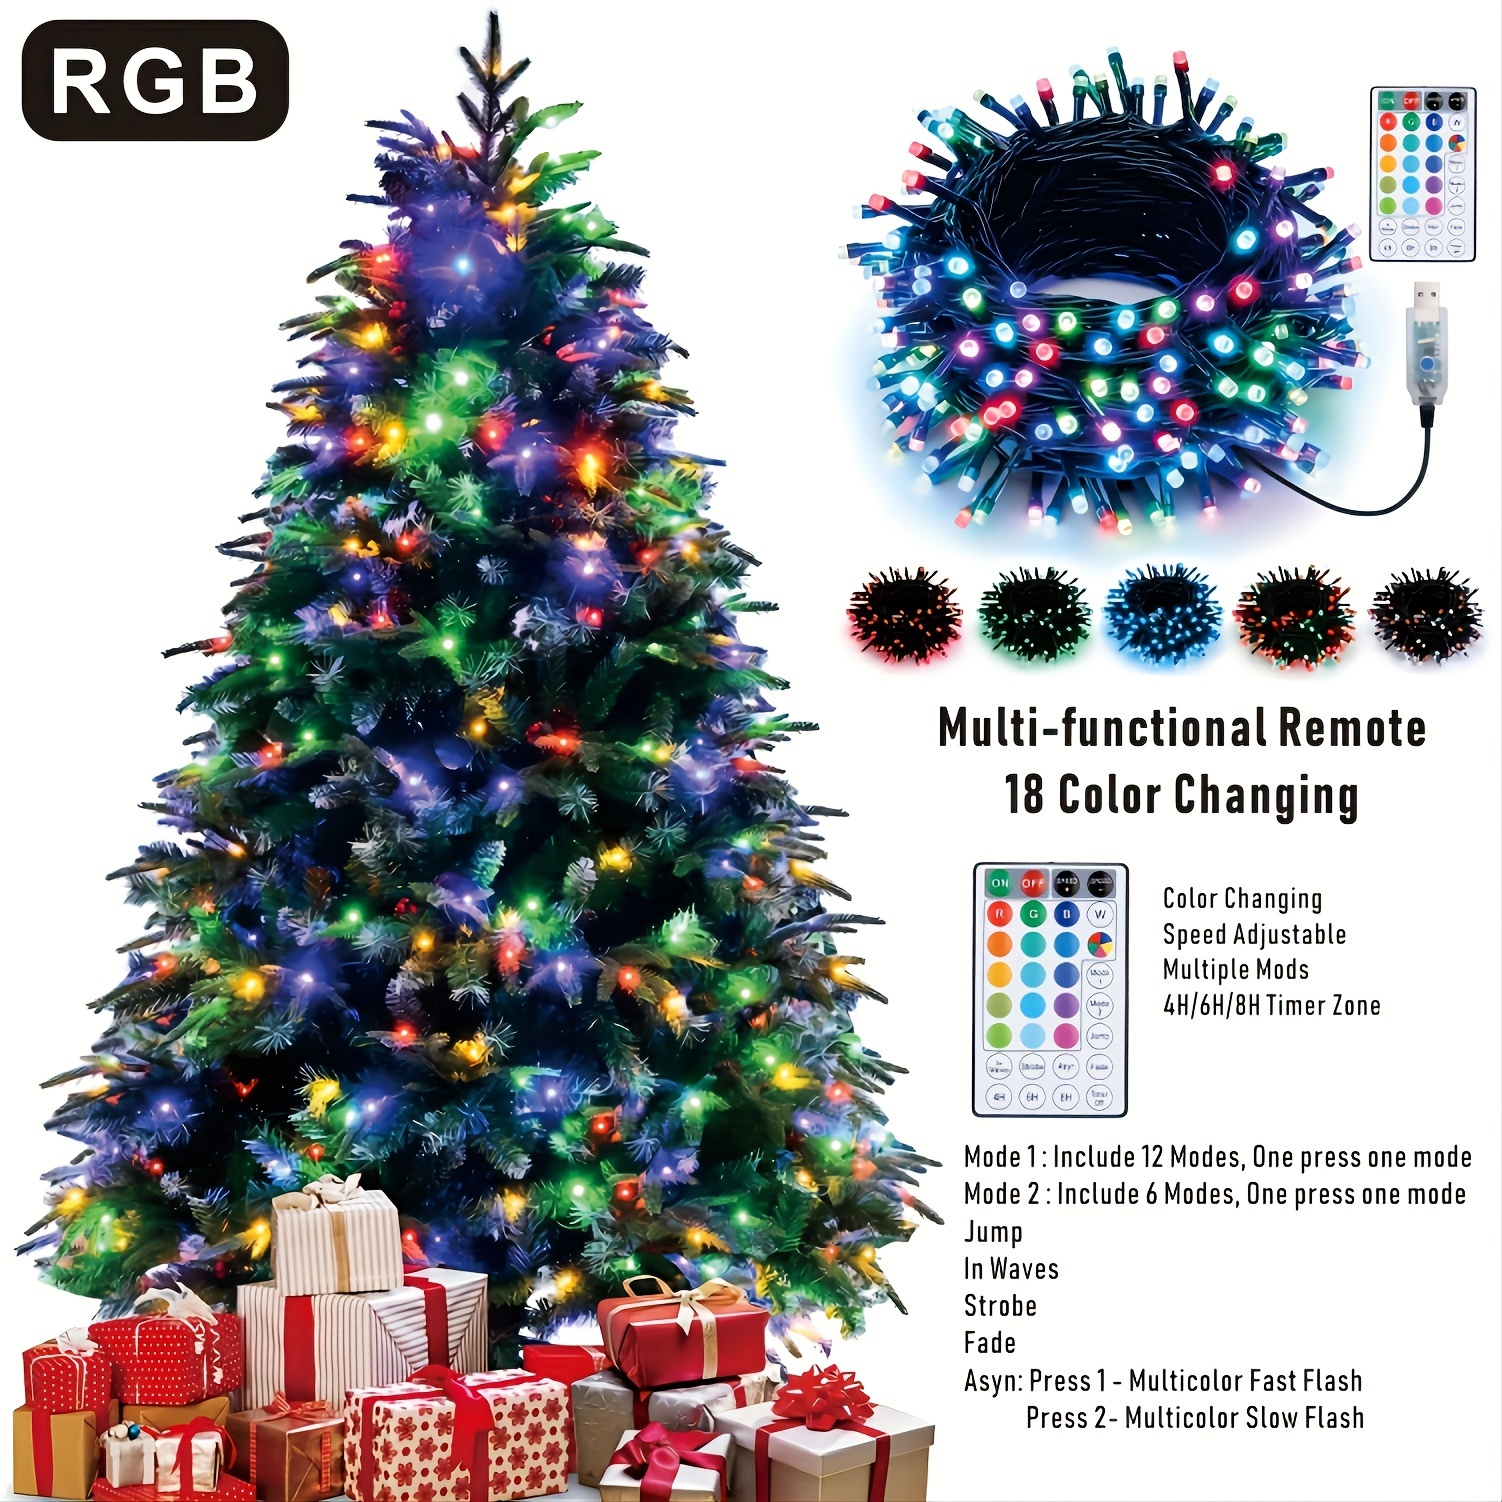 https://img.kwcdn.com/product/christmas-tree-decoration-lights/d69d2f15w98k18-038157f5/Fancyalgo/VirtualModelMatting/dfe1c4398eac3aa364cde7412a0661d4.jpg